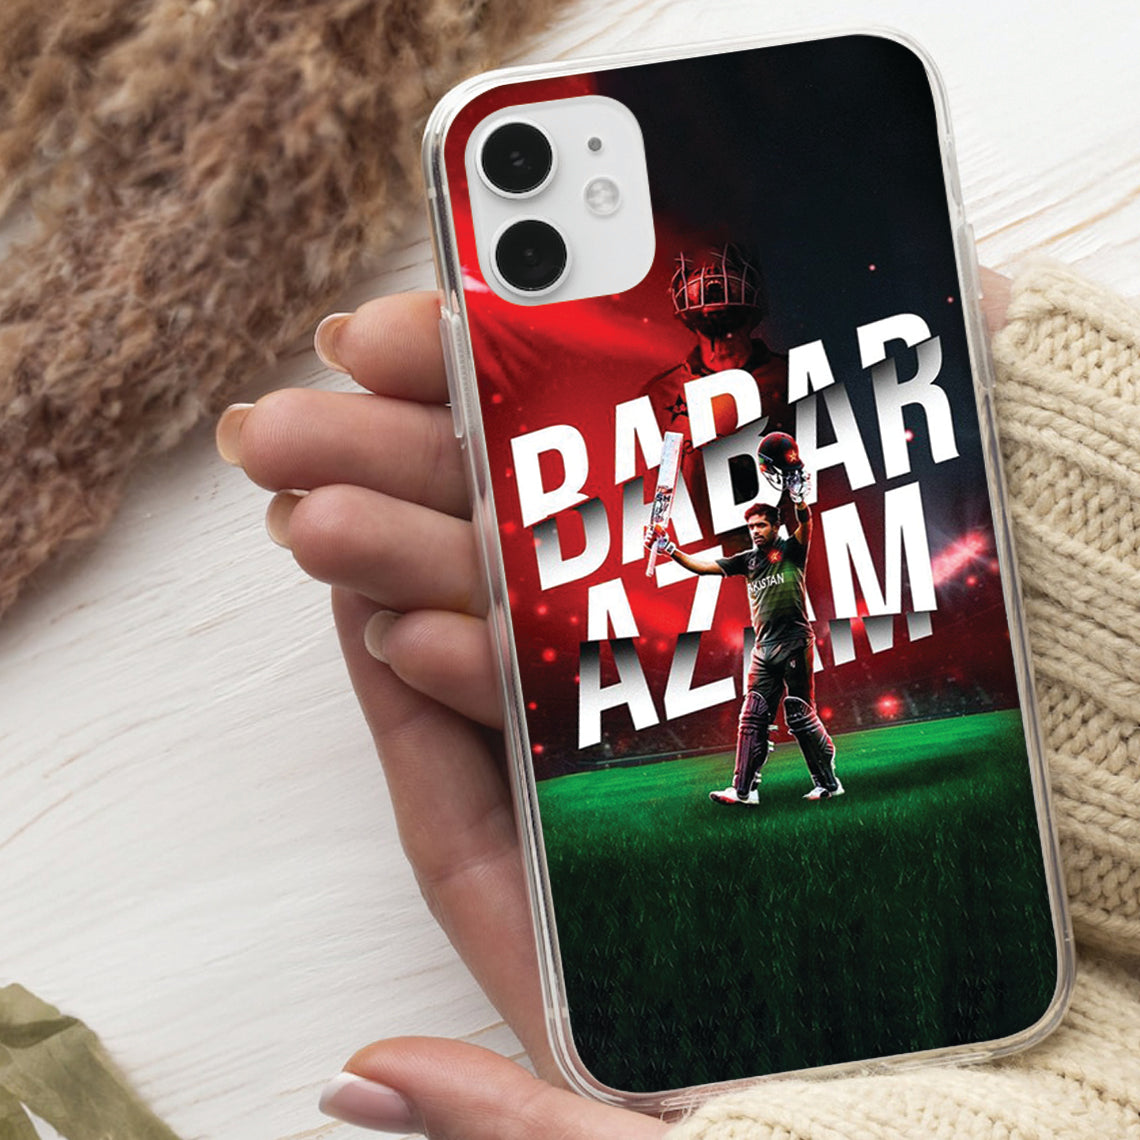 Babar Azam Mobile Covers